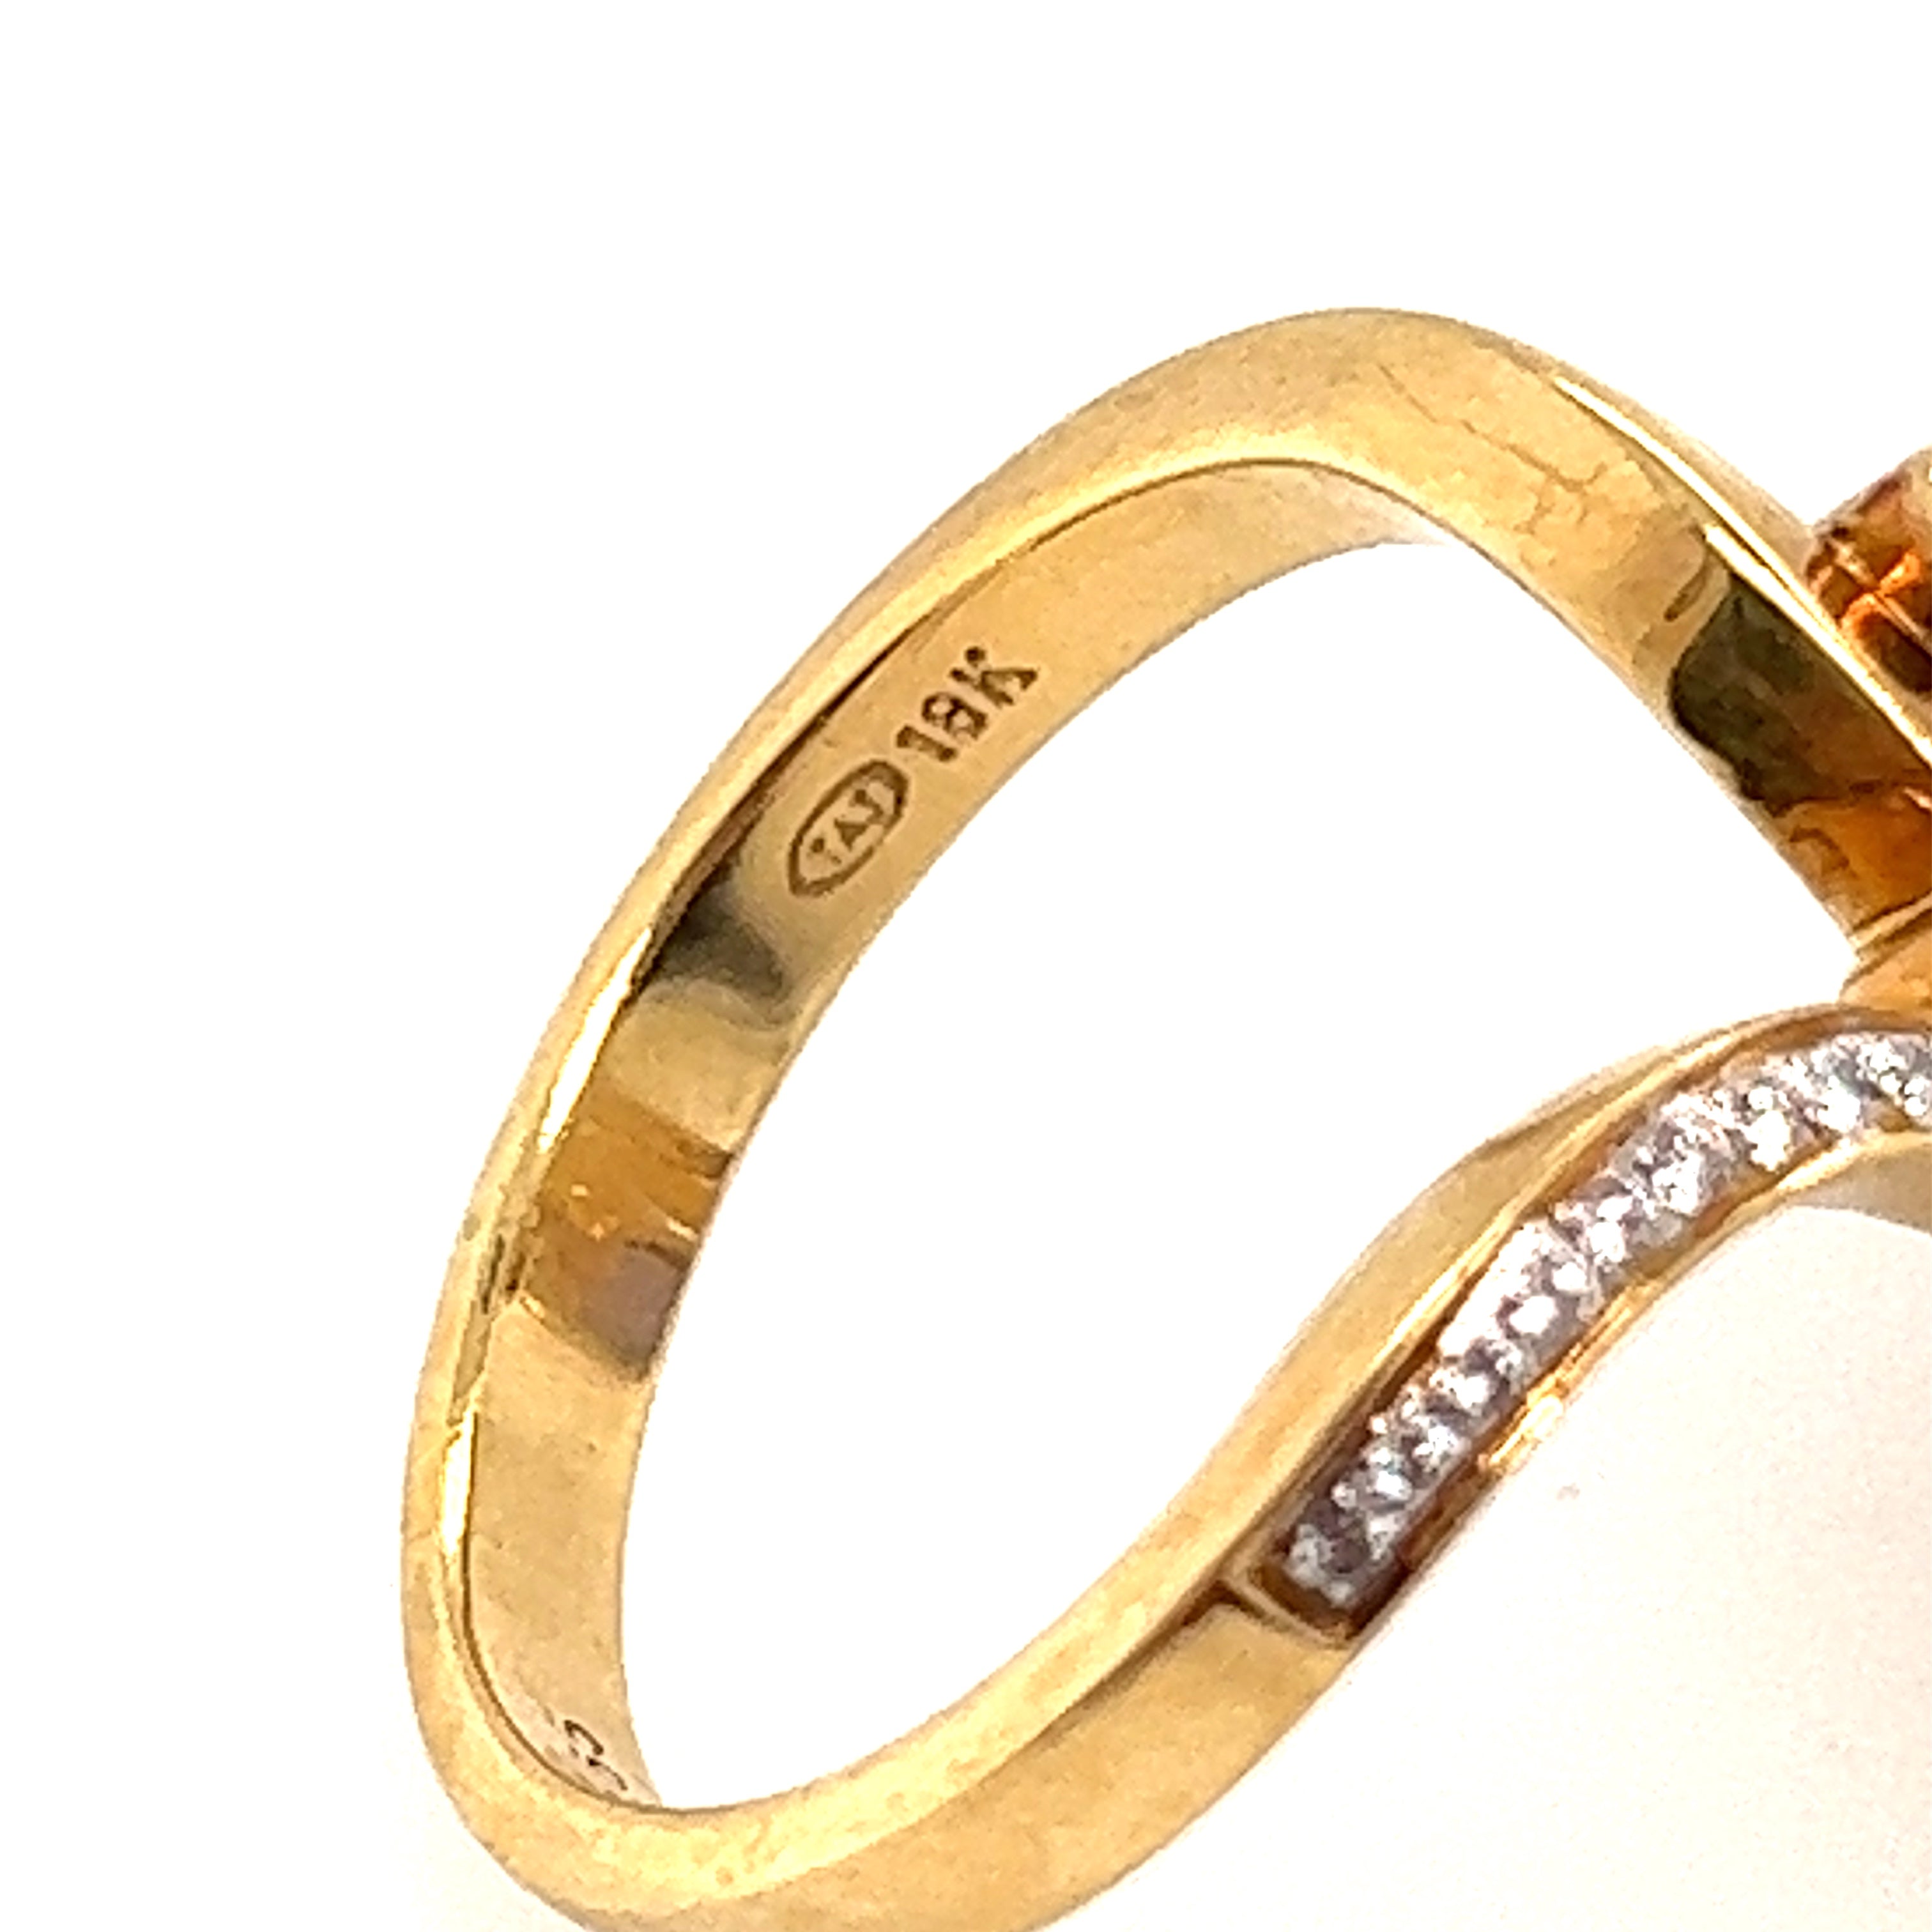 Tanzanite and Diamond Ring set in 18ct Yellow Gold